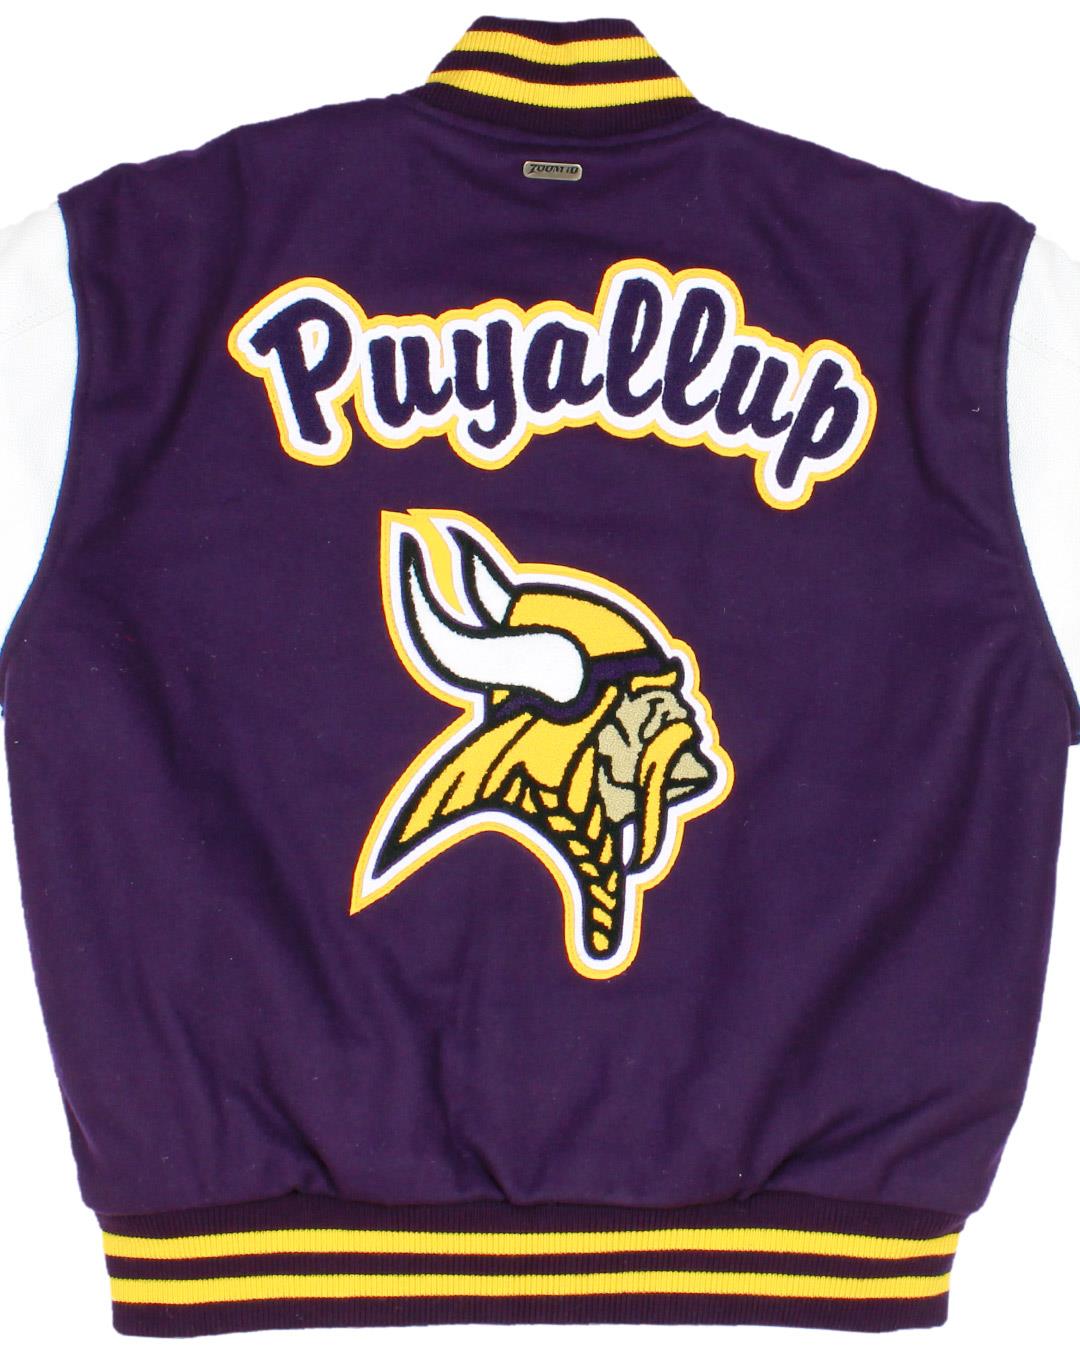 Puyallup High School Vikings Letterman Jacket, Puyallup, WA - Back